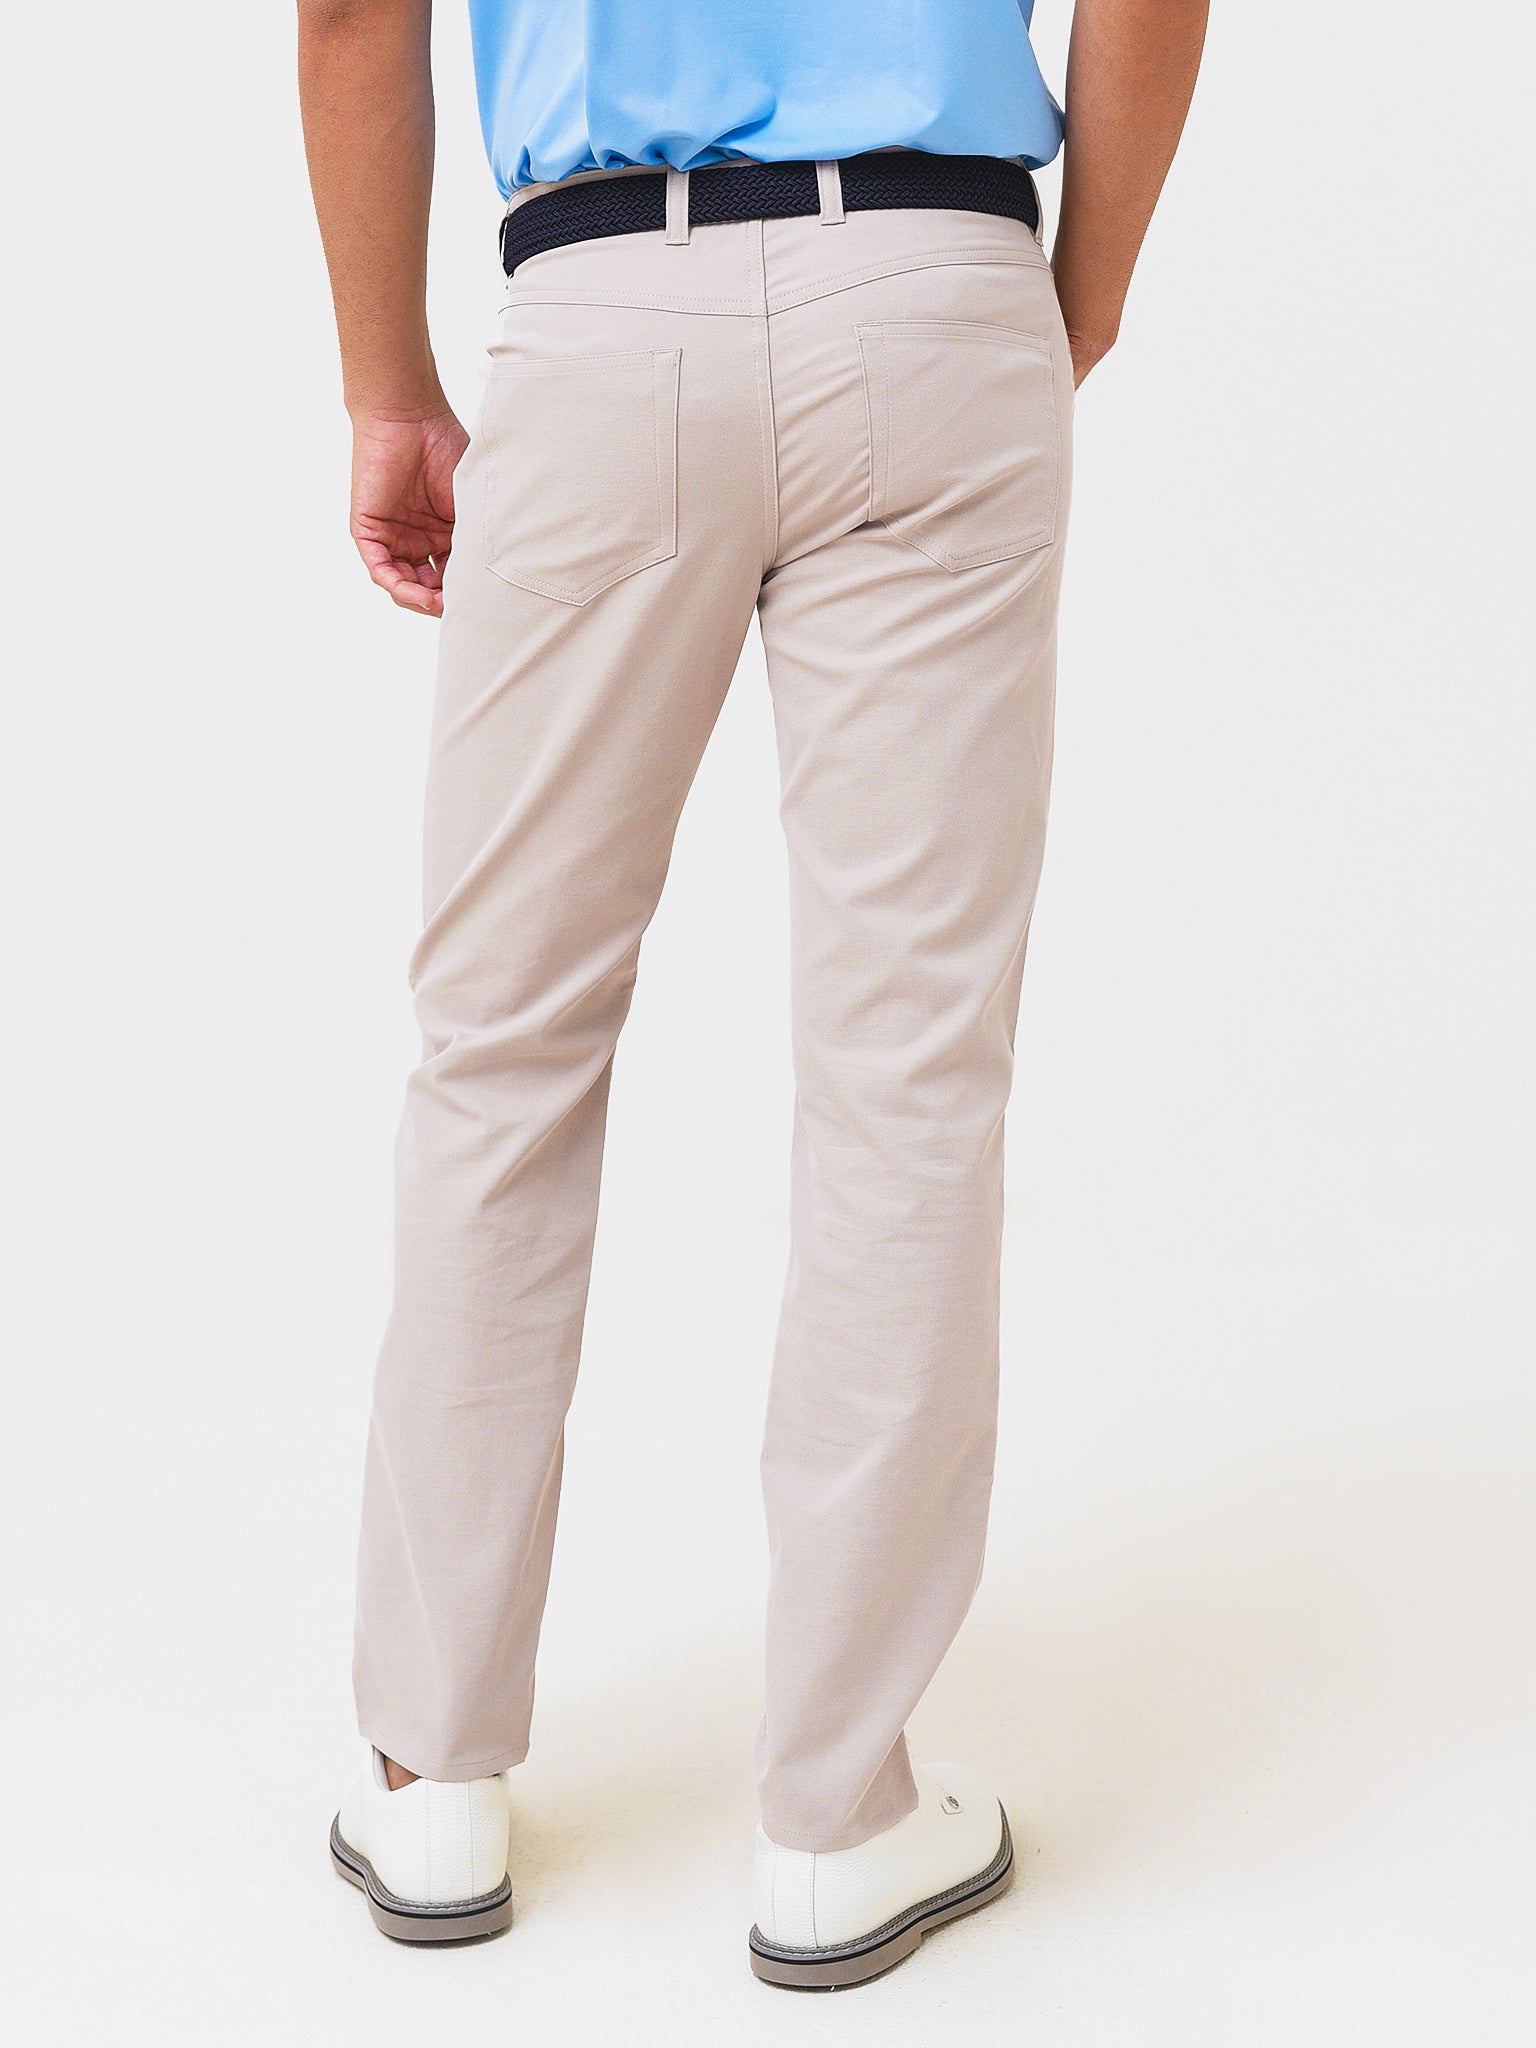 PETER MILLAR eb66 Straight-Leg Tech-Twill Golf Trousers for Men